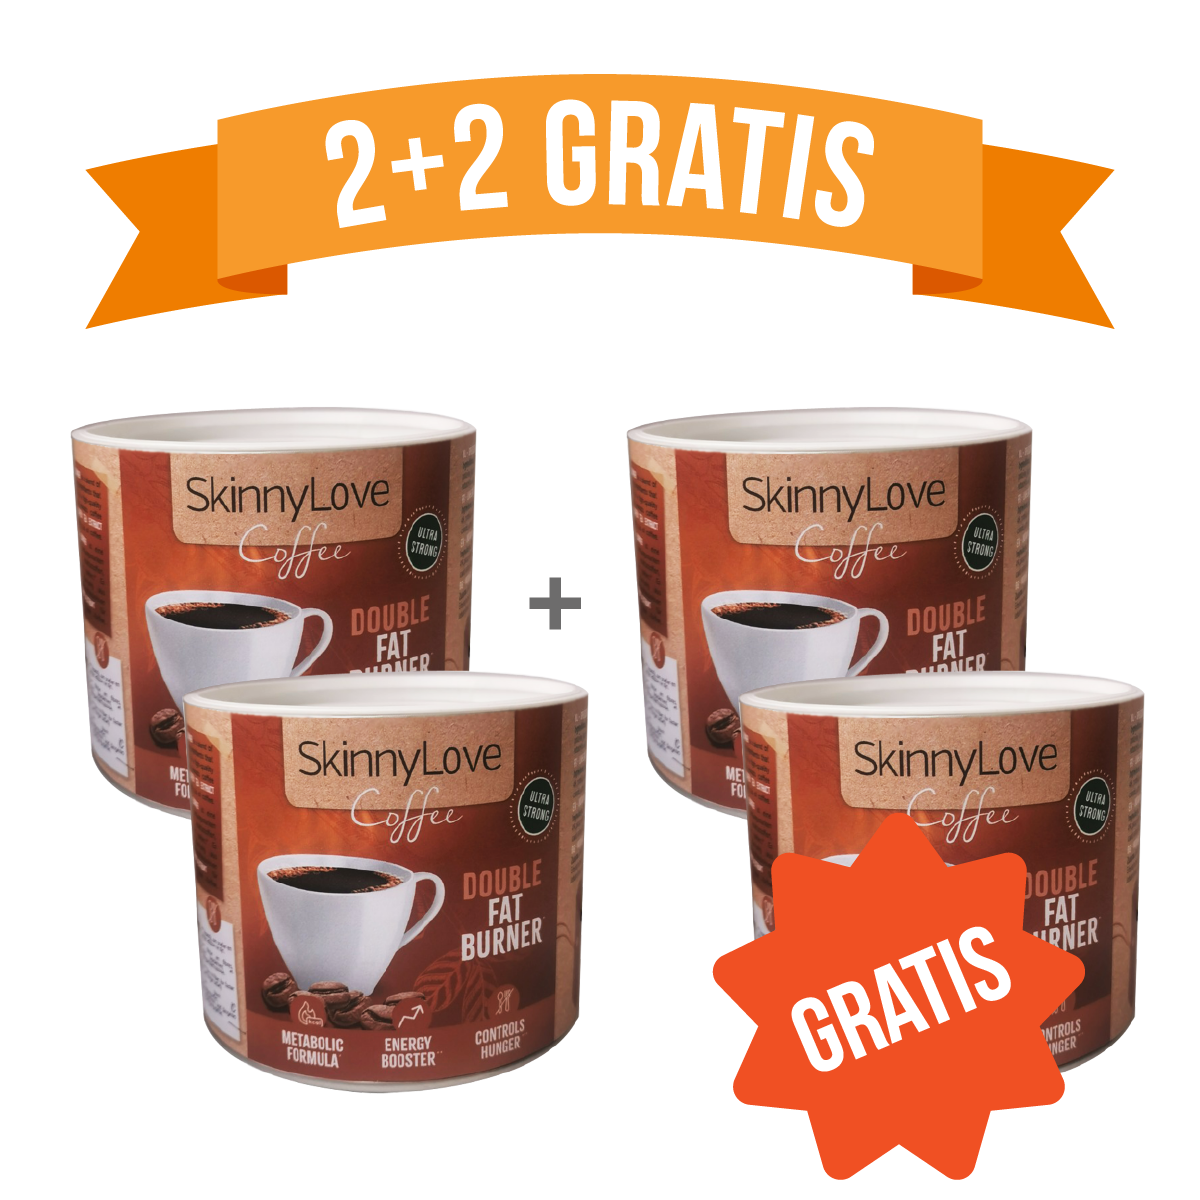 SkinnyLove Coffee 2+2 GRATIS